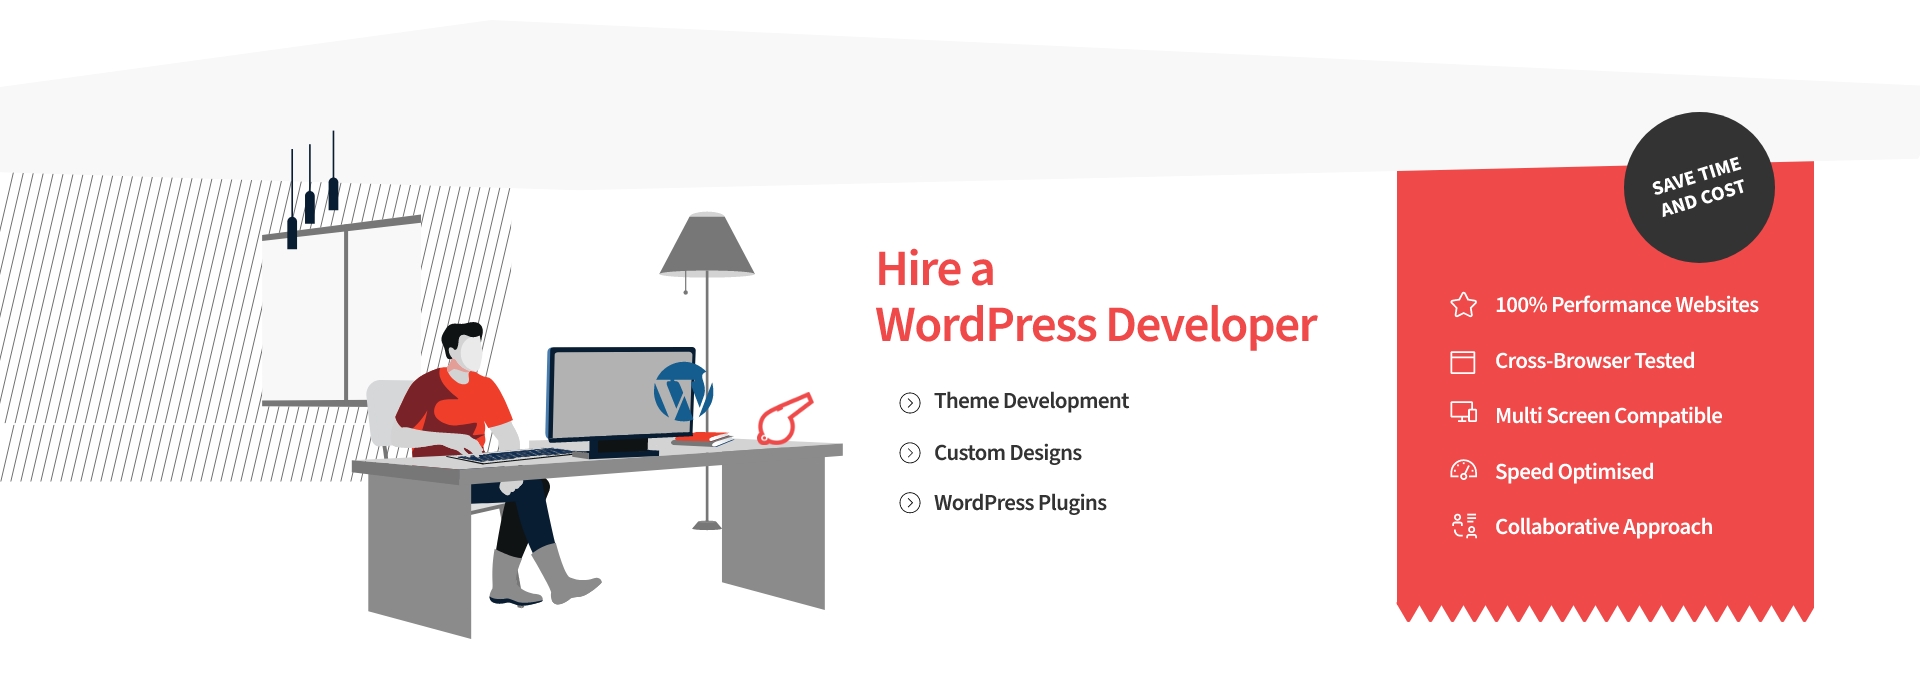 Hire Dedicated WordPress Developer and WordPress Expert - ColorWhistle